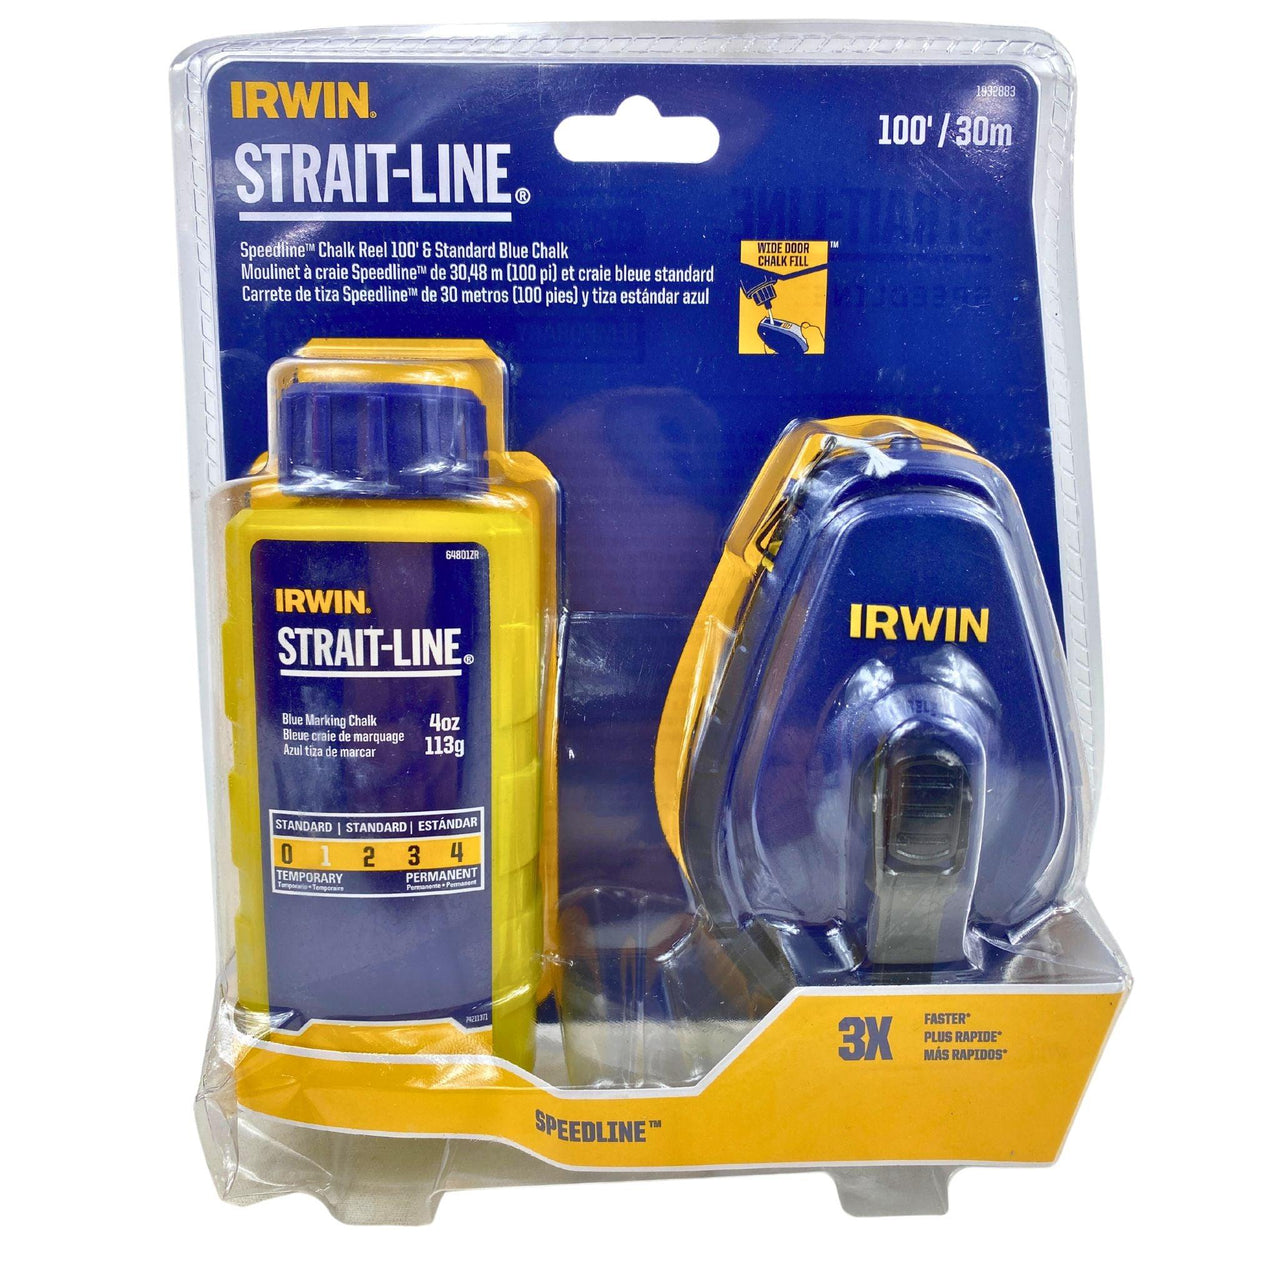 Irwin Strait-Line Speedline Chalk Reel 100' & Standard Blue Chalk 100'/30m 3X Faster (35 Pcs Lot) - Discount Wholesalers Inc